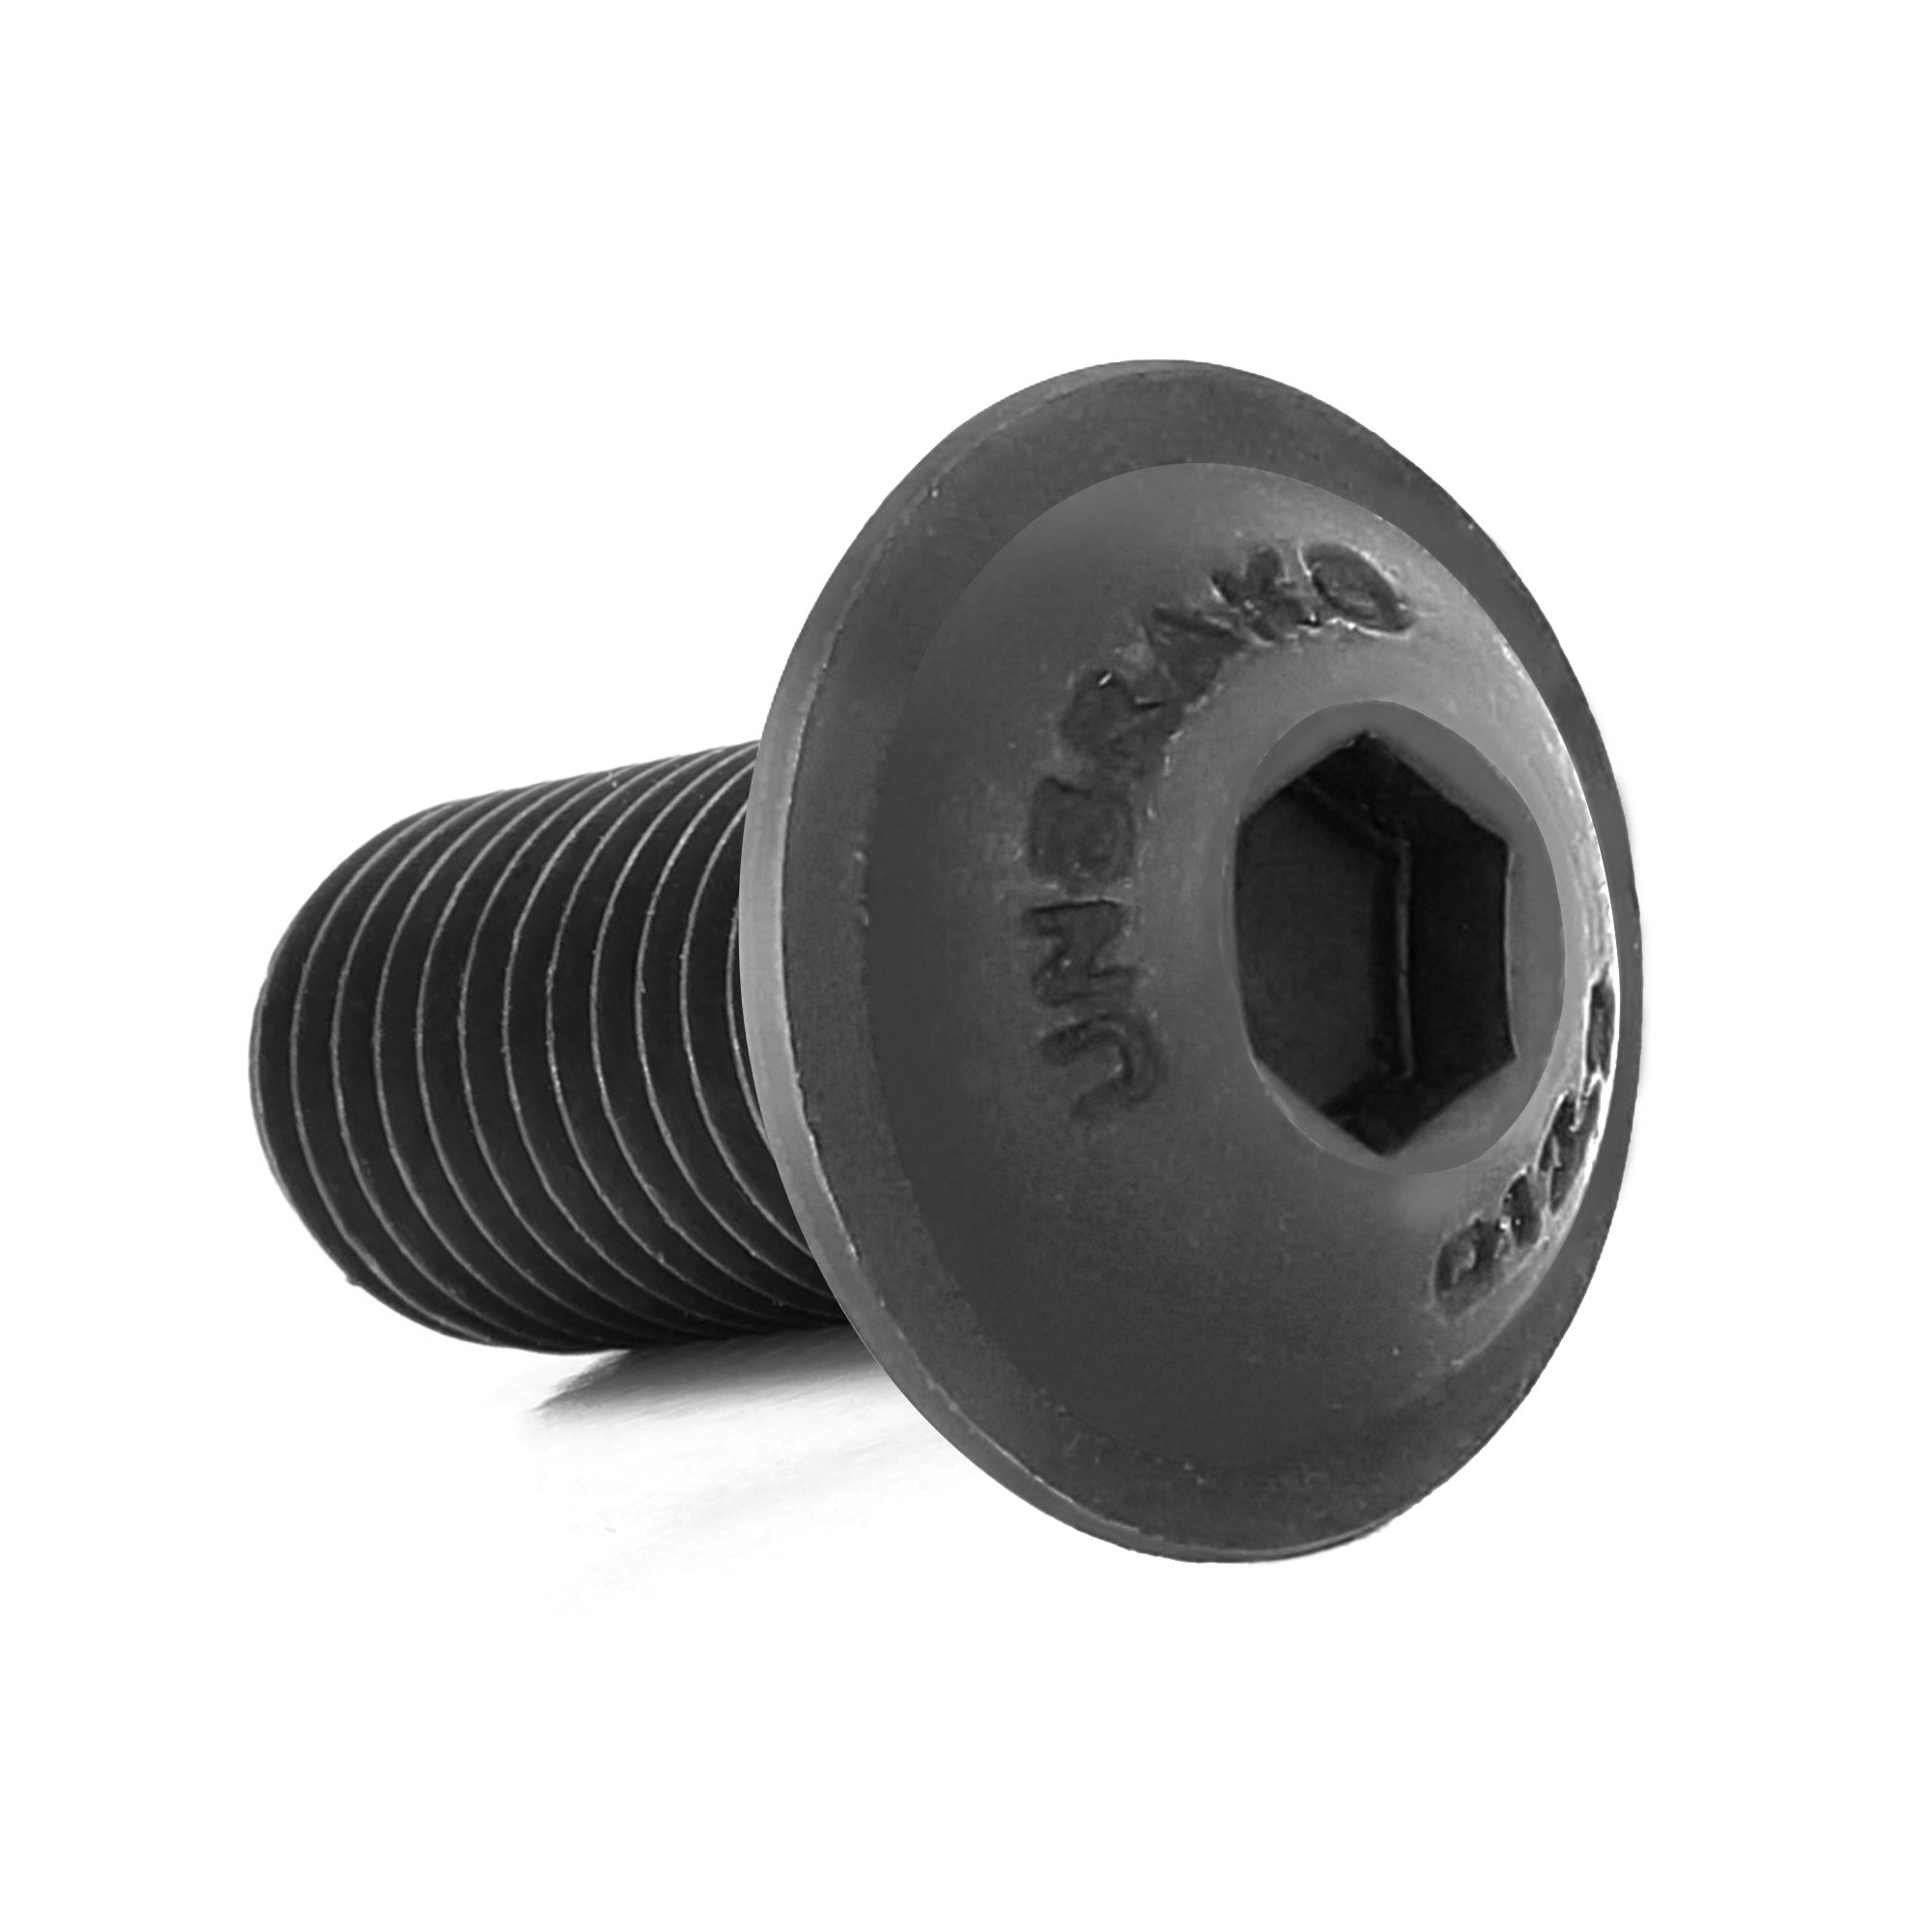 M6-1x16 ISO 7380 Alloy Steel Flange Button Hd Socket Cap Screw Full Thrd Black Oxide (Unbrako)